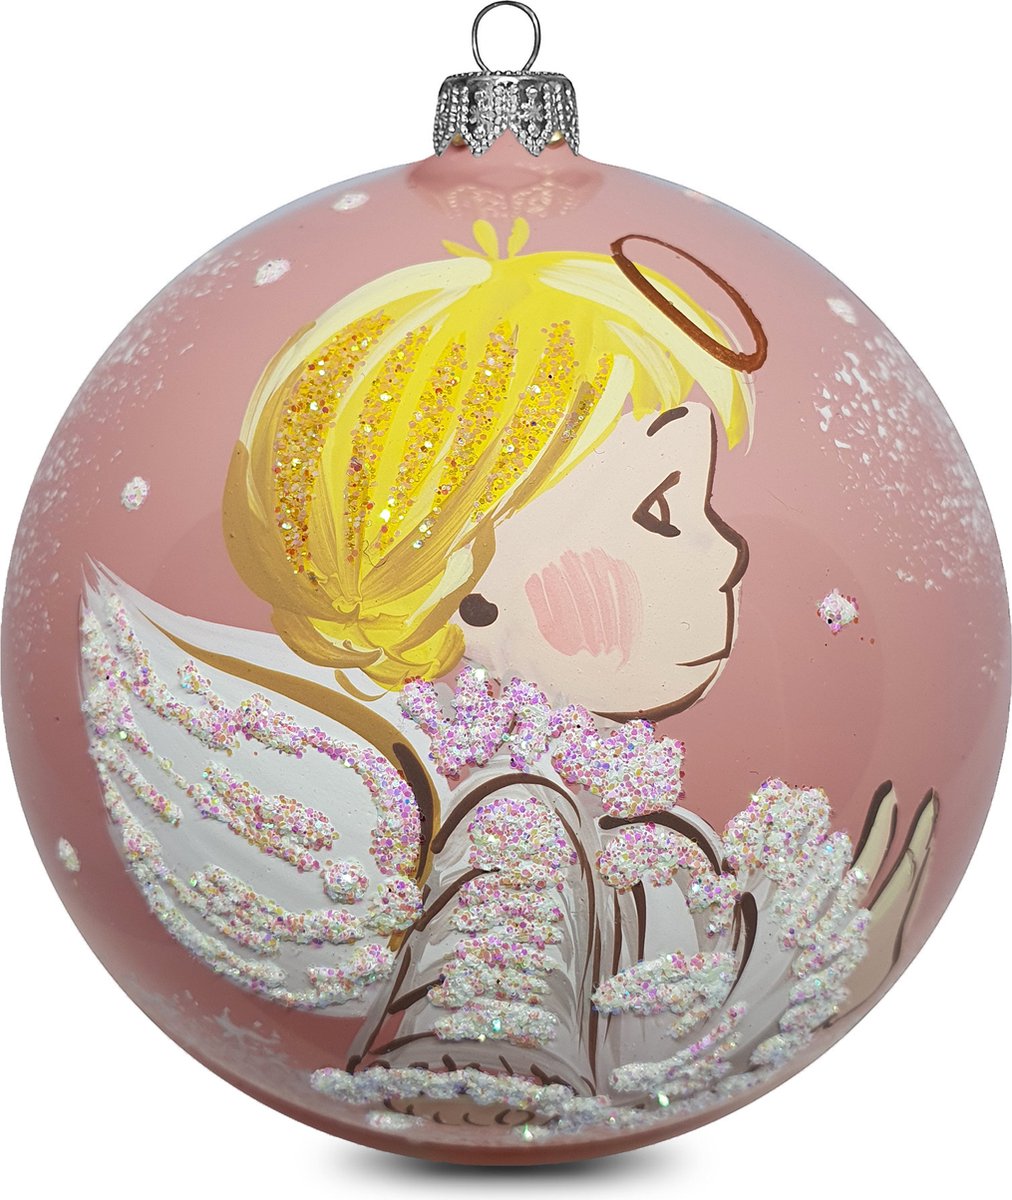 Fairy Glass - Engel - Handbeschilderde Kerstbal - Mond geblazen glas - 8cm